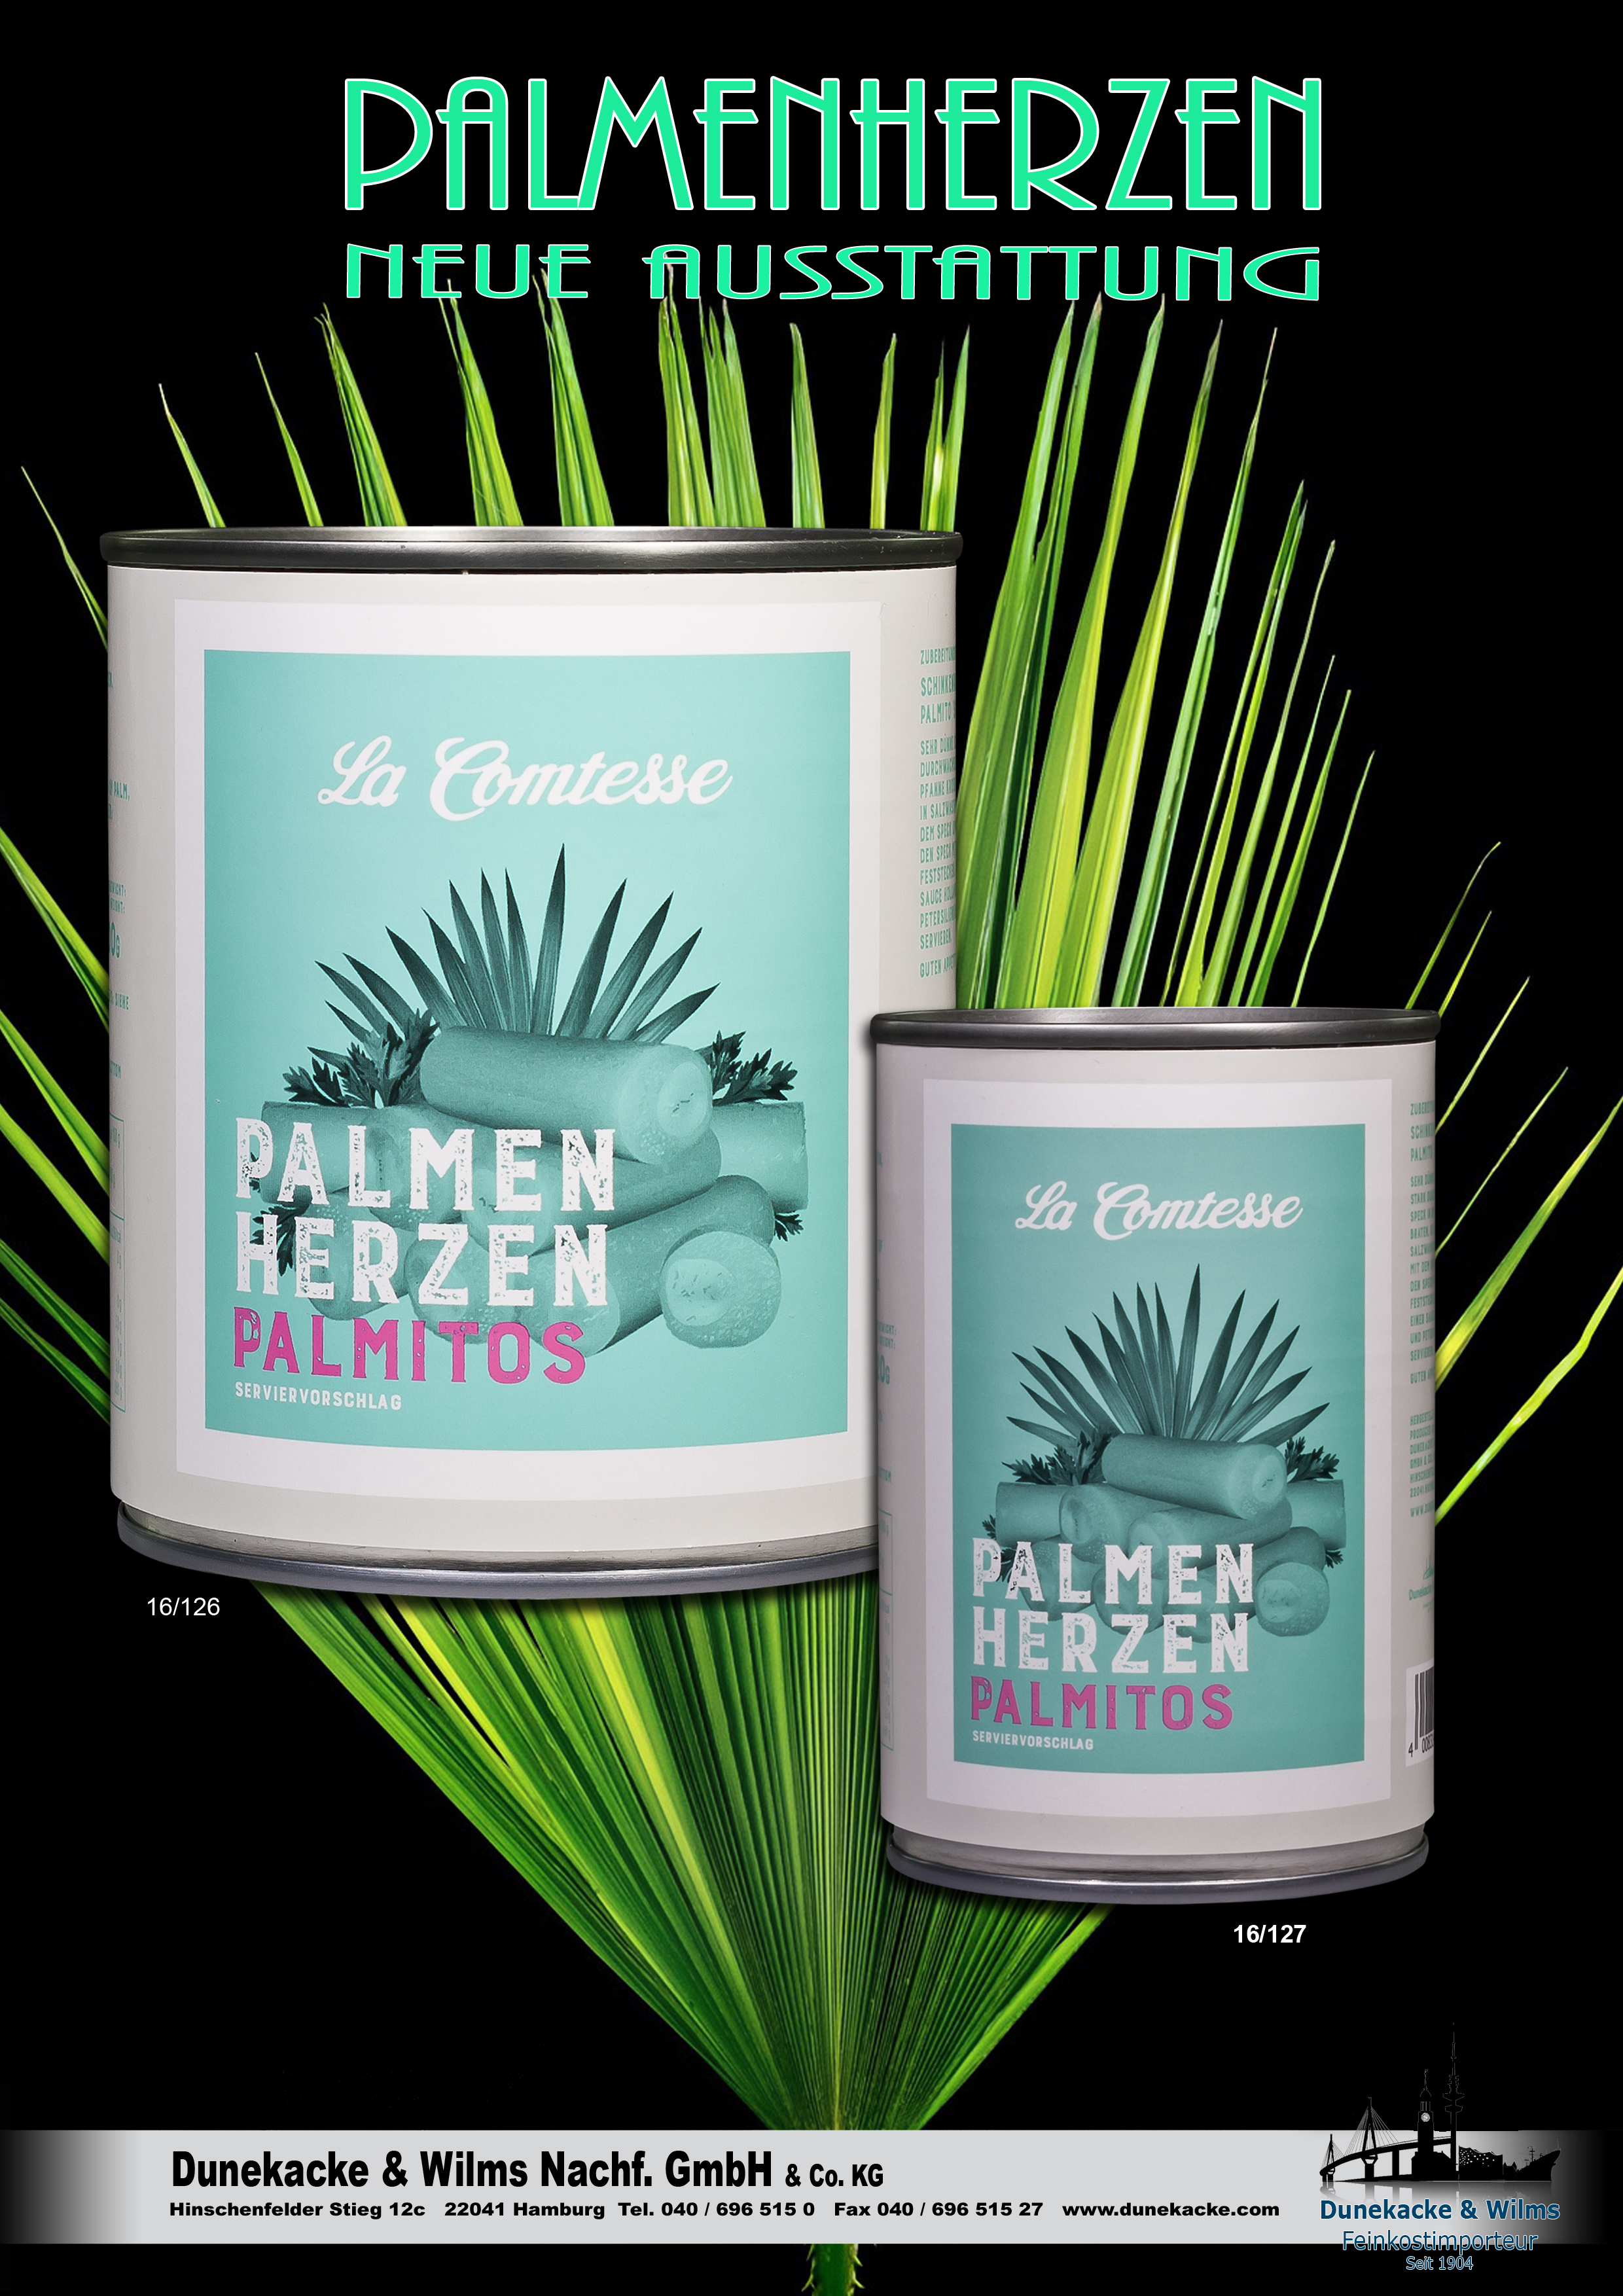 Palmitos Palmenherzen MAuOZZkMaYx